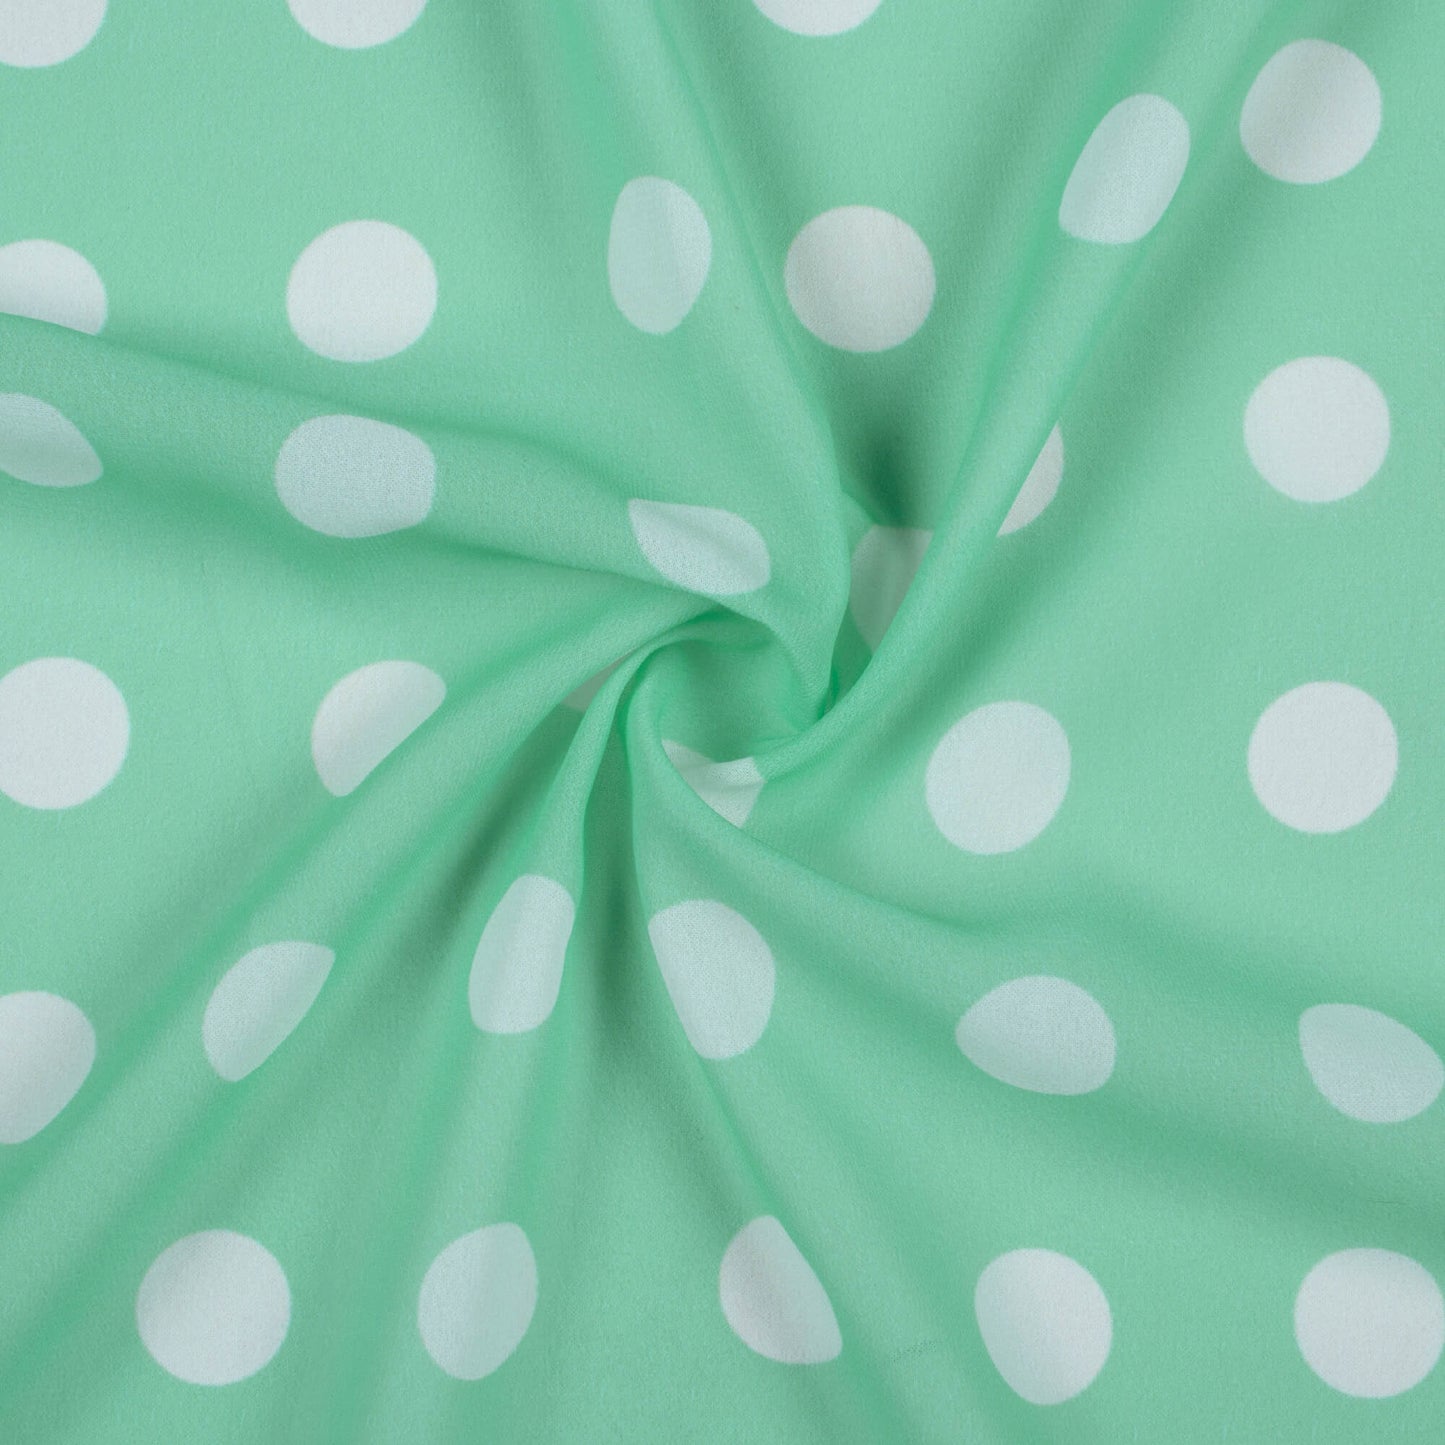 Mint Green And White Polka Dots Pattern Digital Print Georgette Fabric